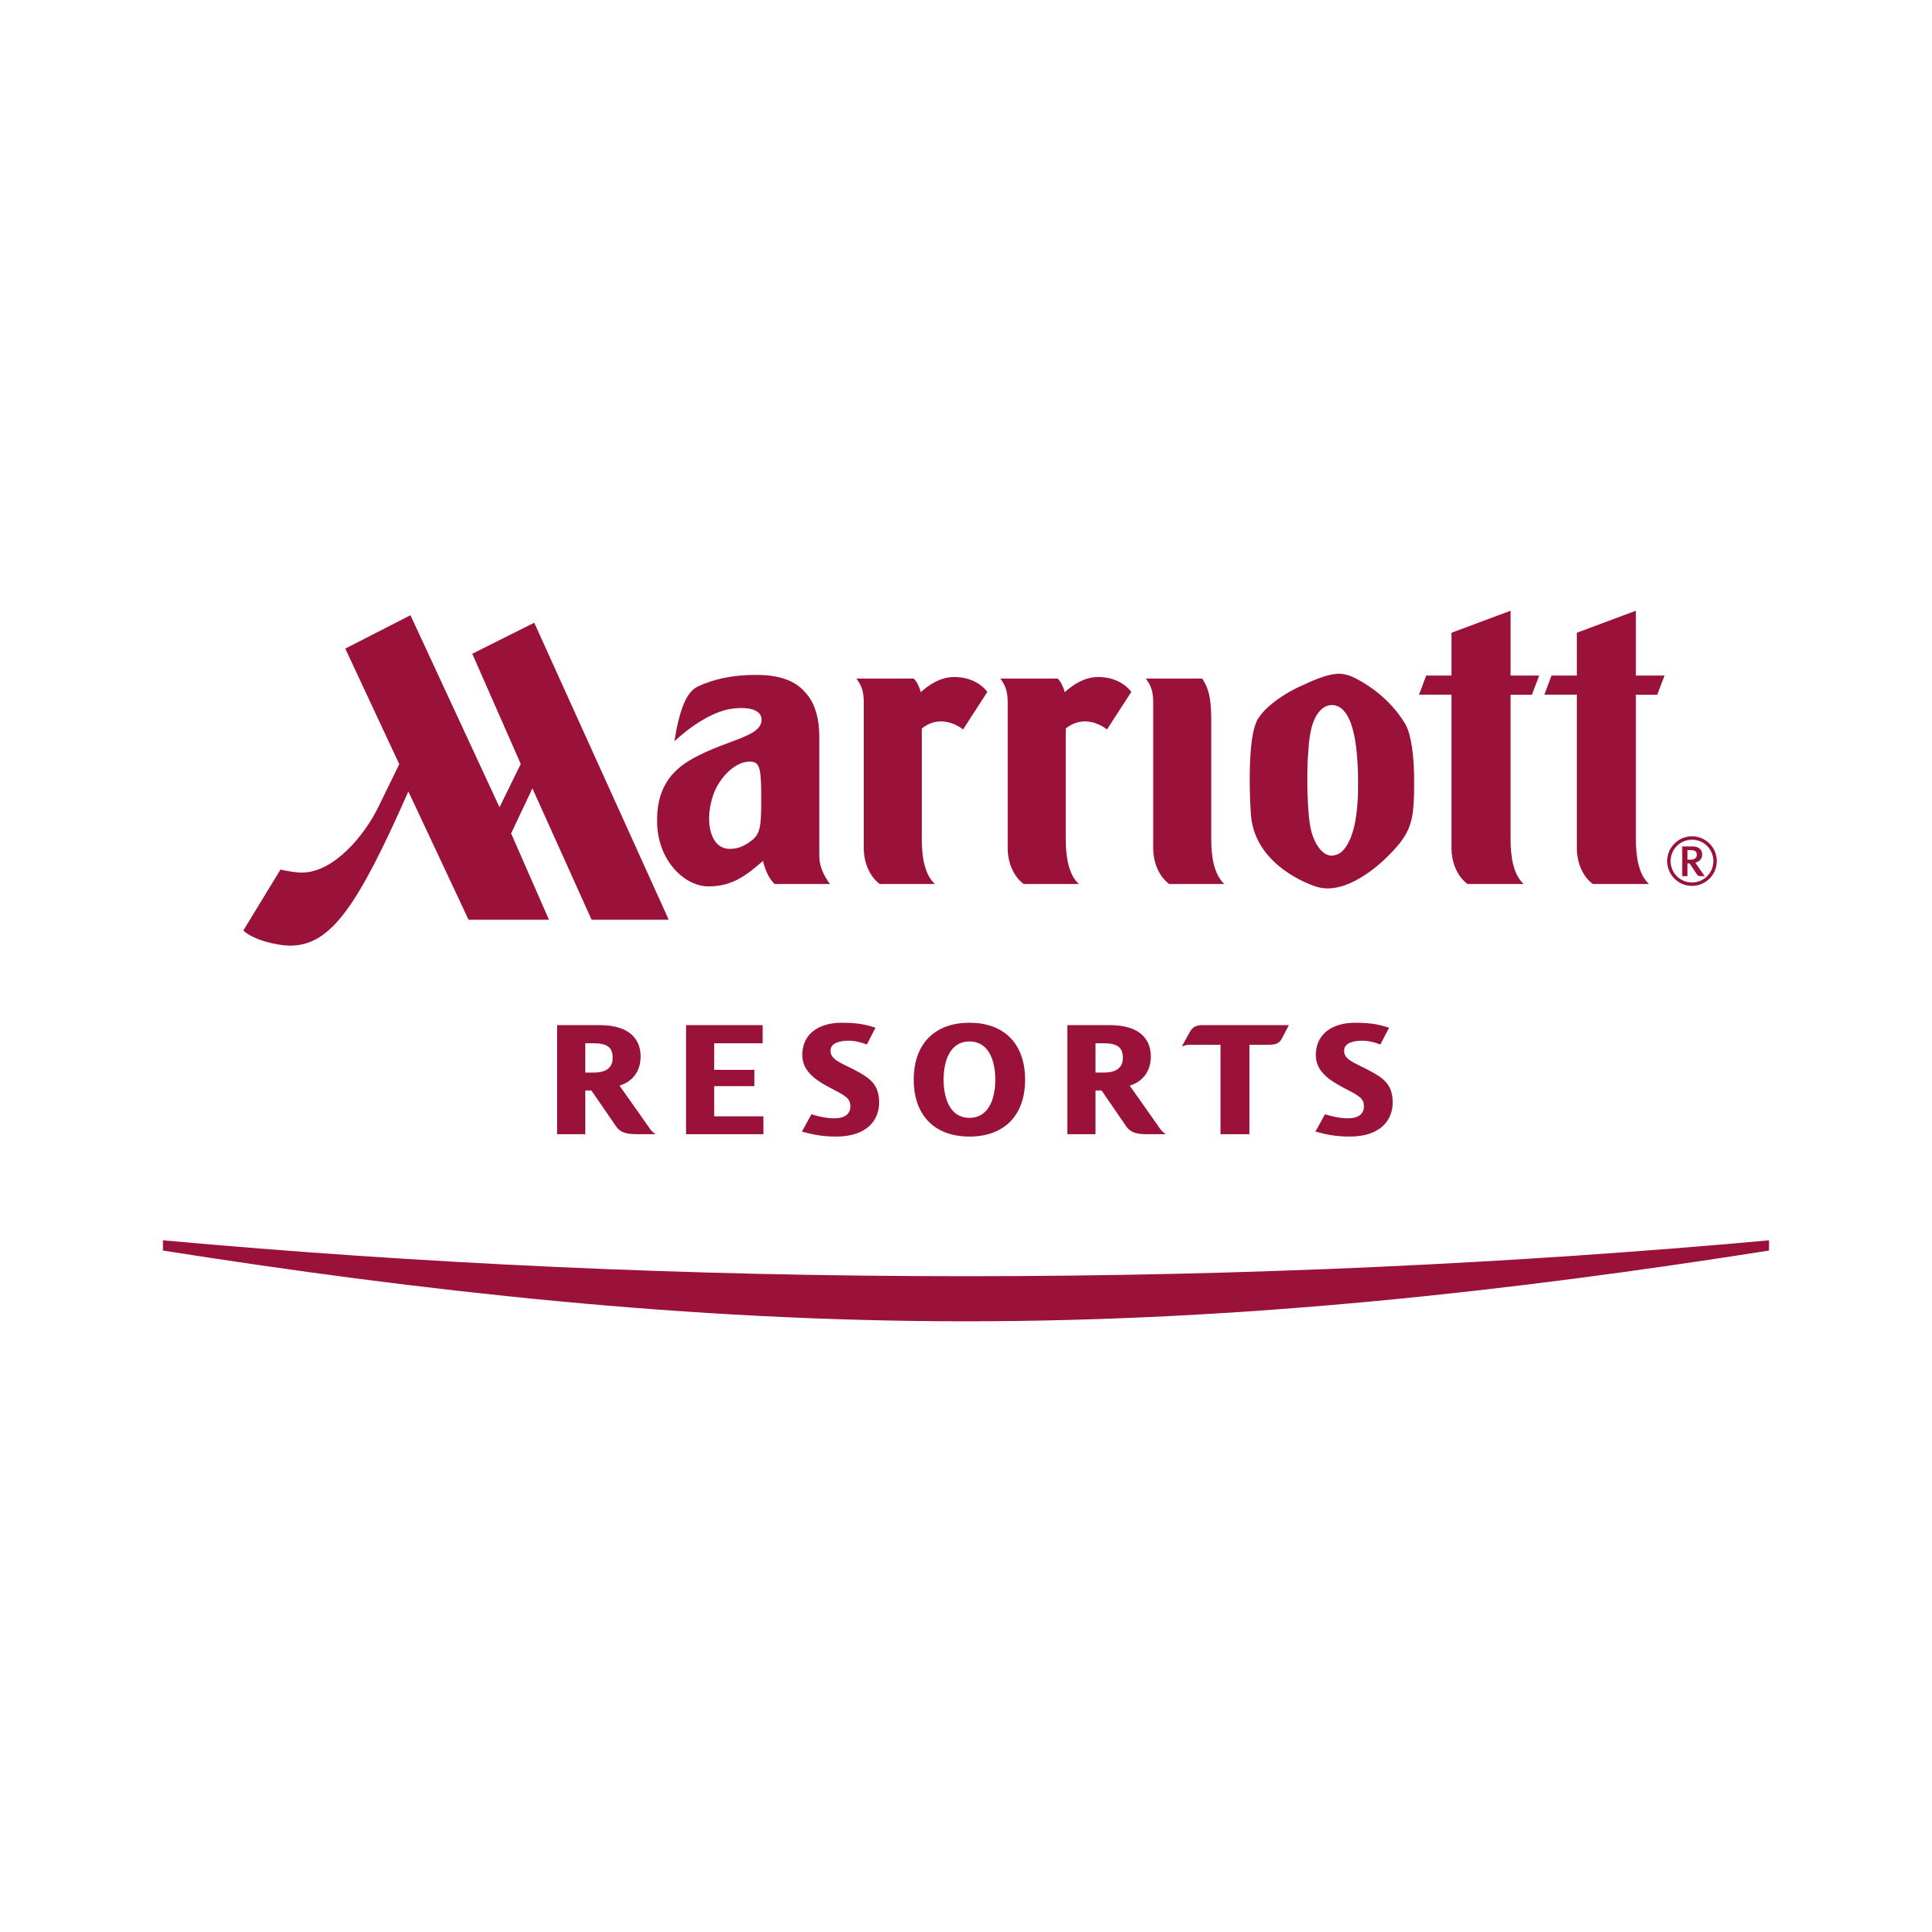 Courtyard By Marriott Logo Pn